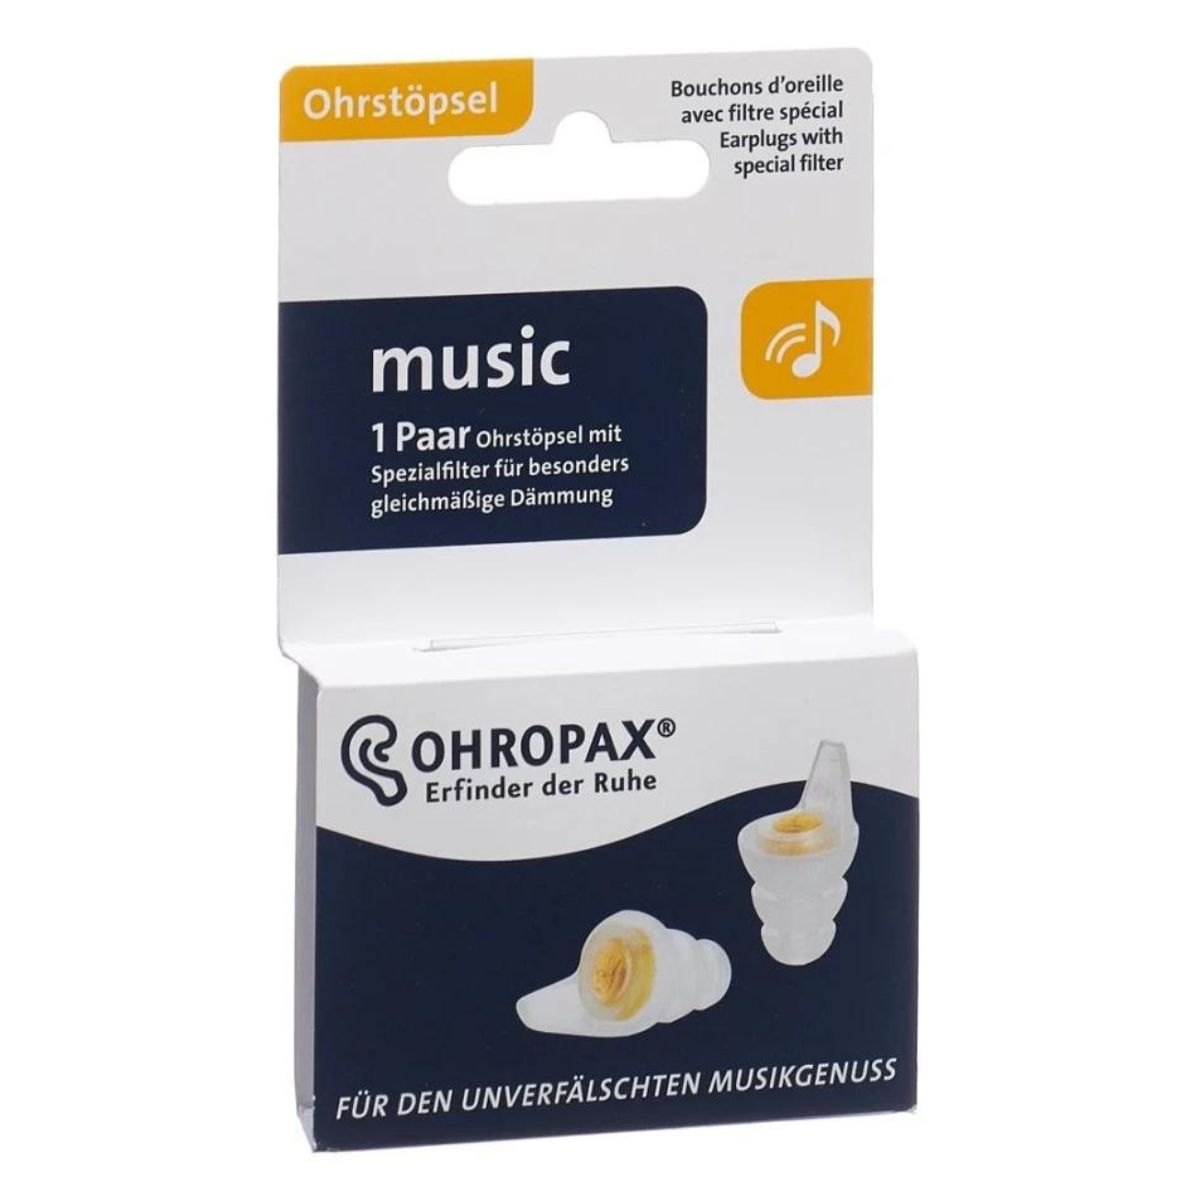 Ohropax music idealer Schutz bei Konzerten